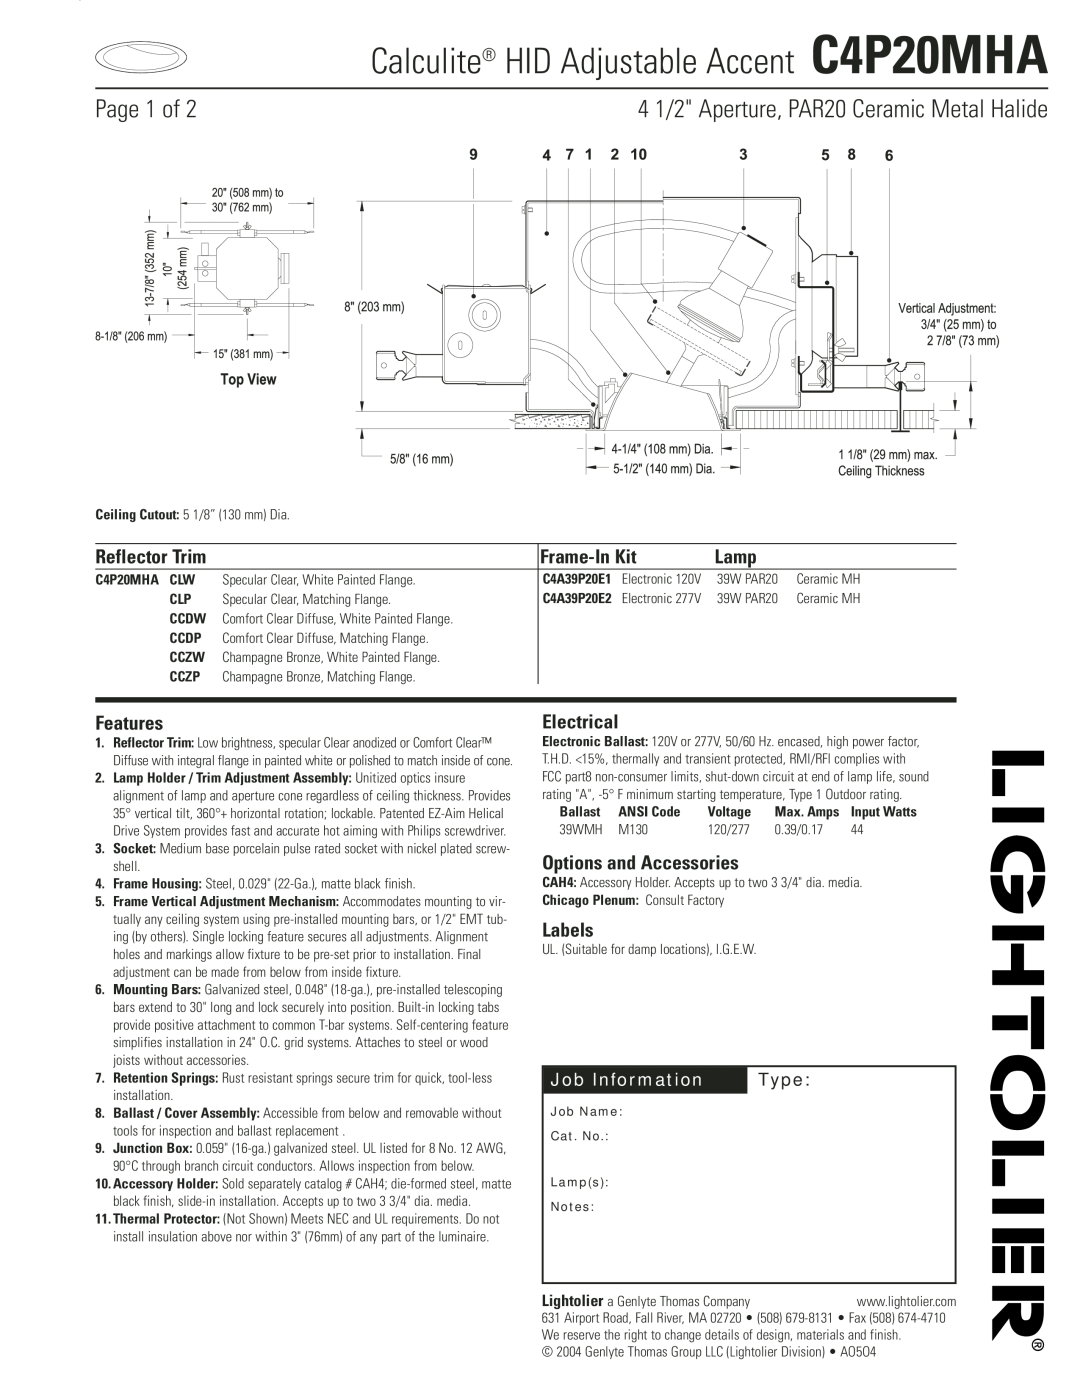 Lightolier C4P20MHA manual 4 1/2 Aperture, PAR20 Ceramic Metal Halide, Reflector Trim, Job Information, Type, Page 1 of 